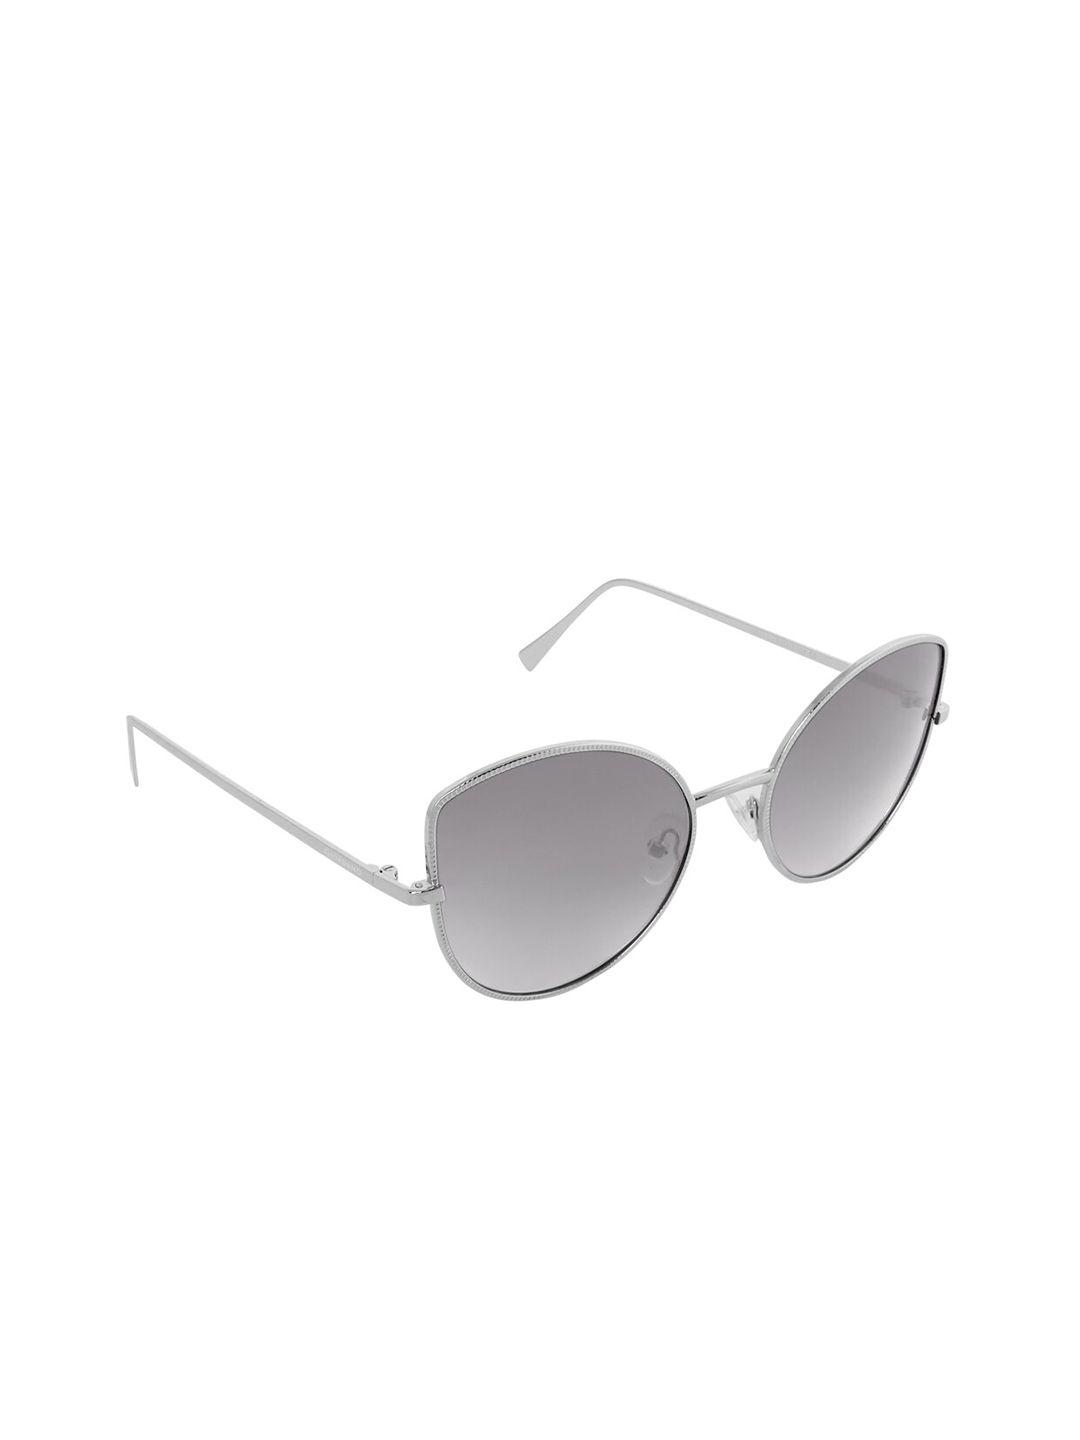 giordano women mirrored lens & silver-toned cateye sunglasses ga9017c03